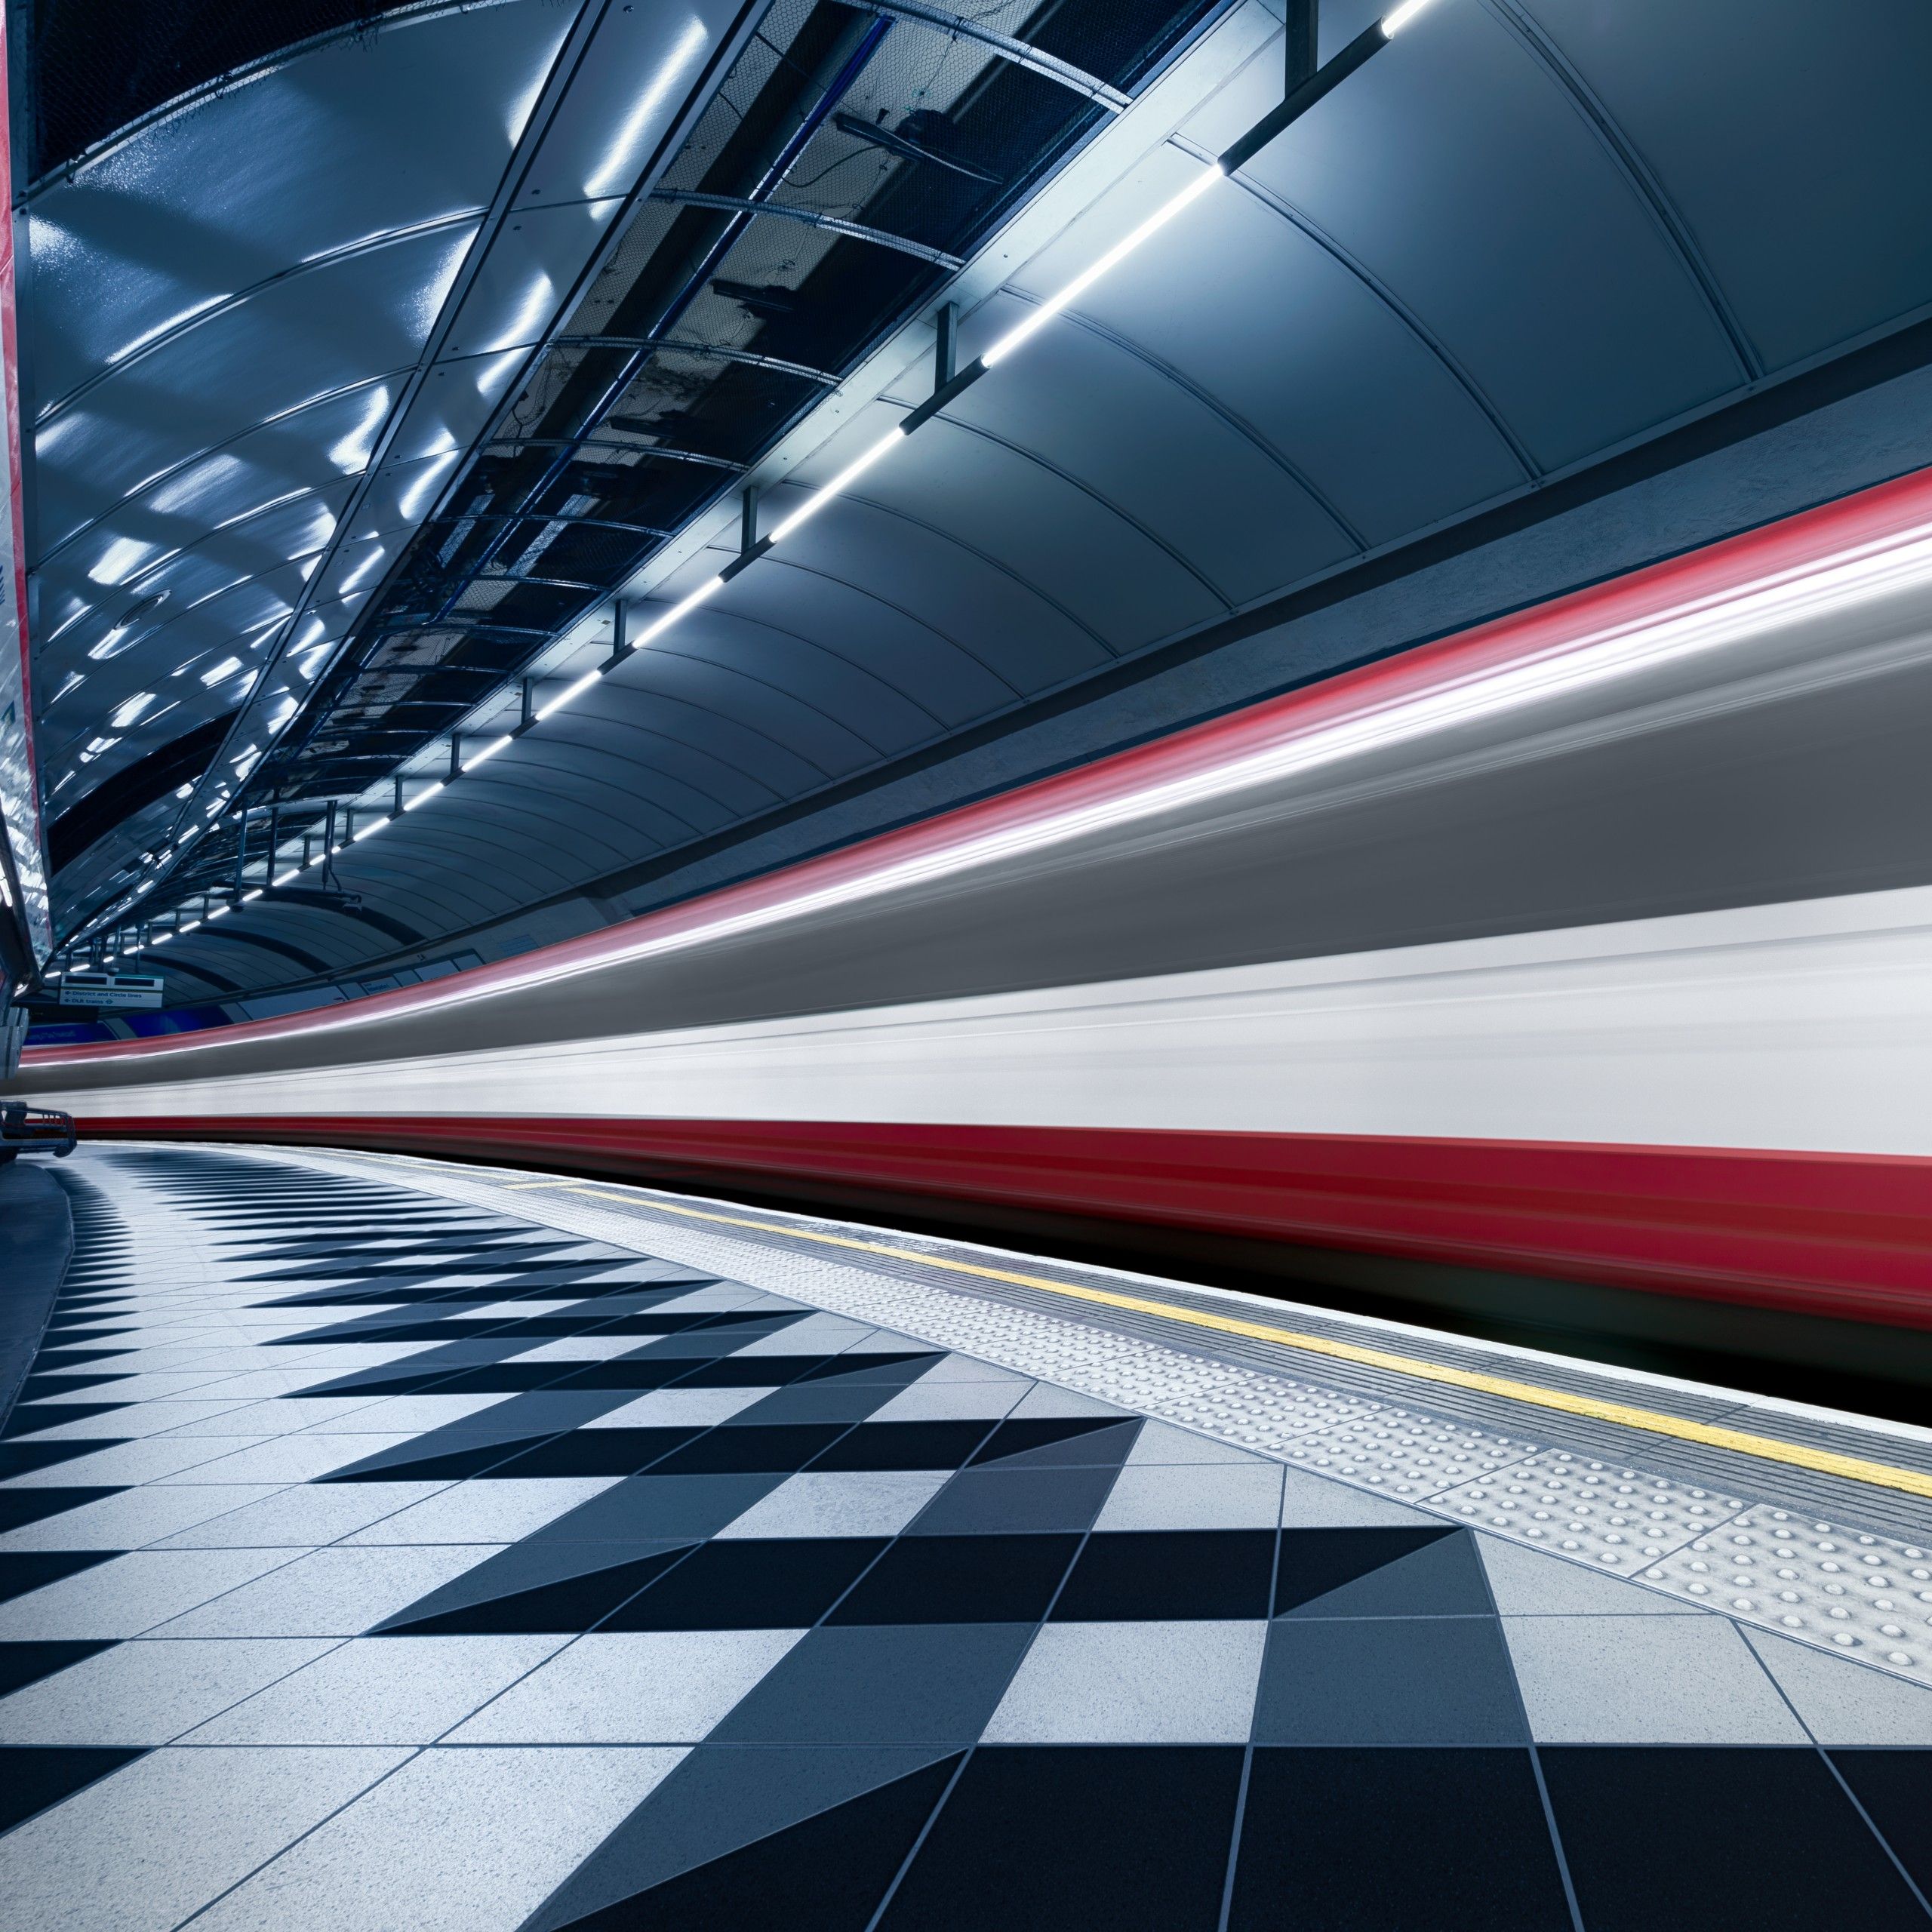 Bank Station 4K Wallpaper, Blurred, Train, London, England, Underground, Subway, Metro, Journey, World